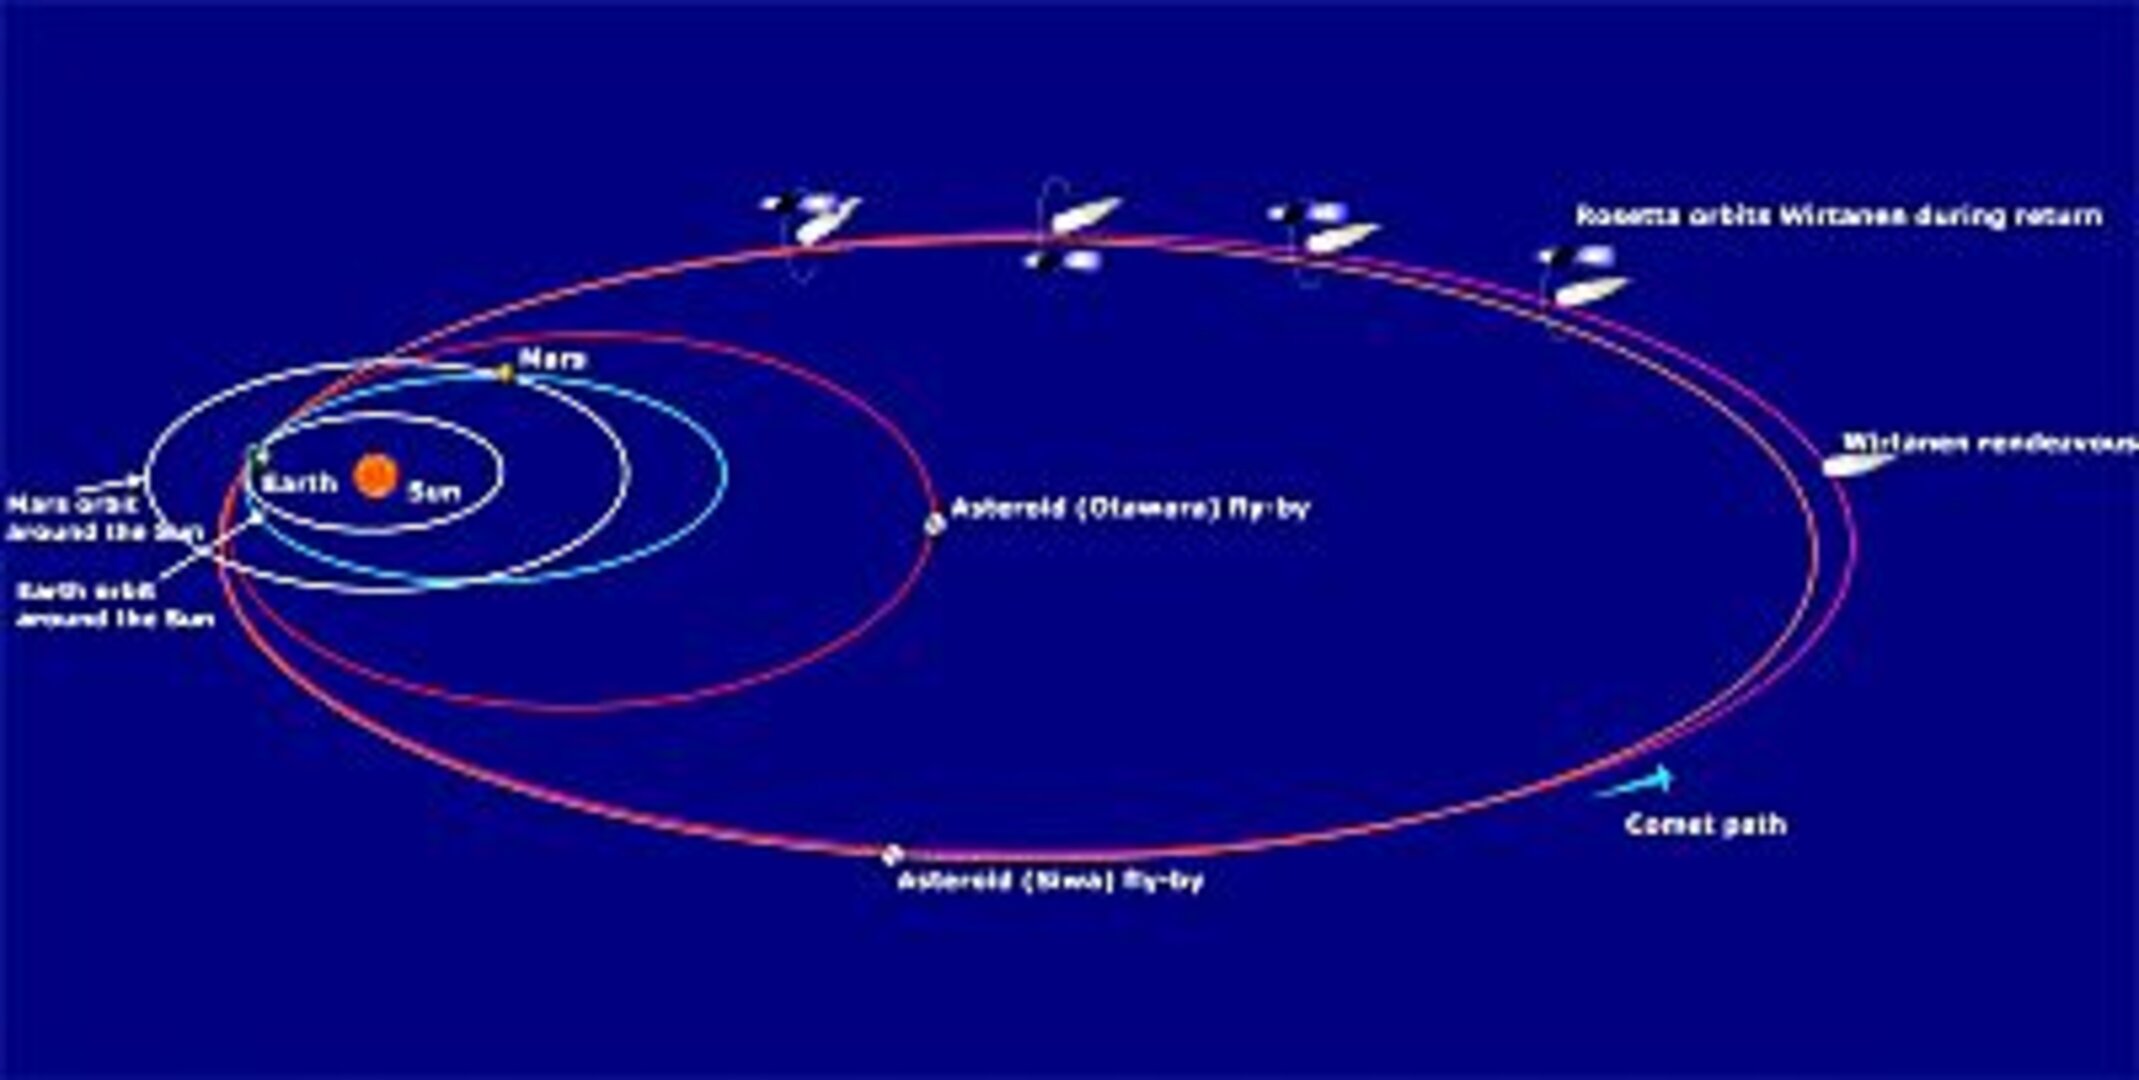 The Rosetta Orbit to reach comet Wirtanen